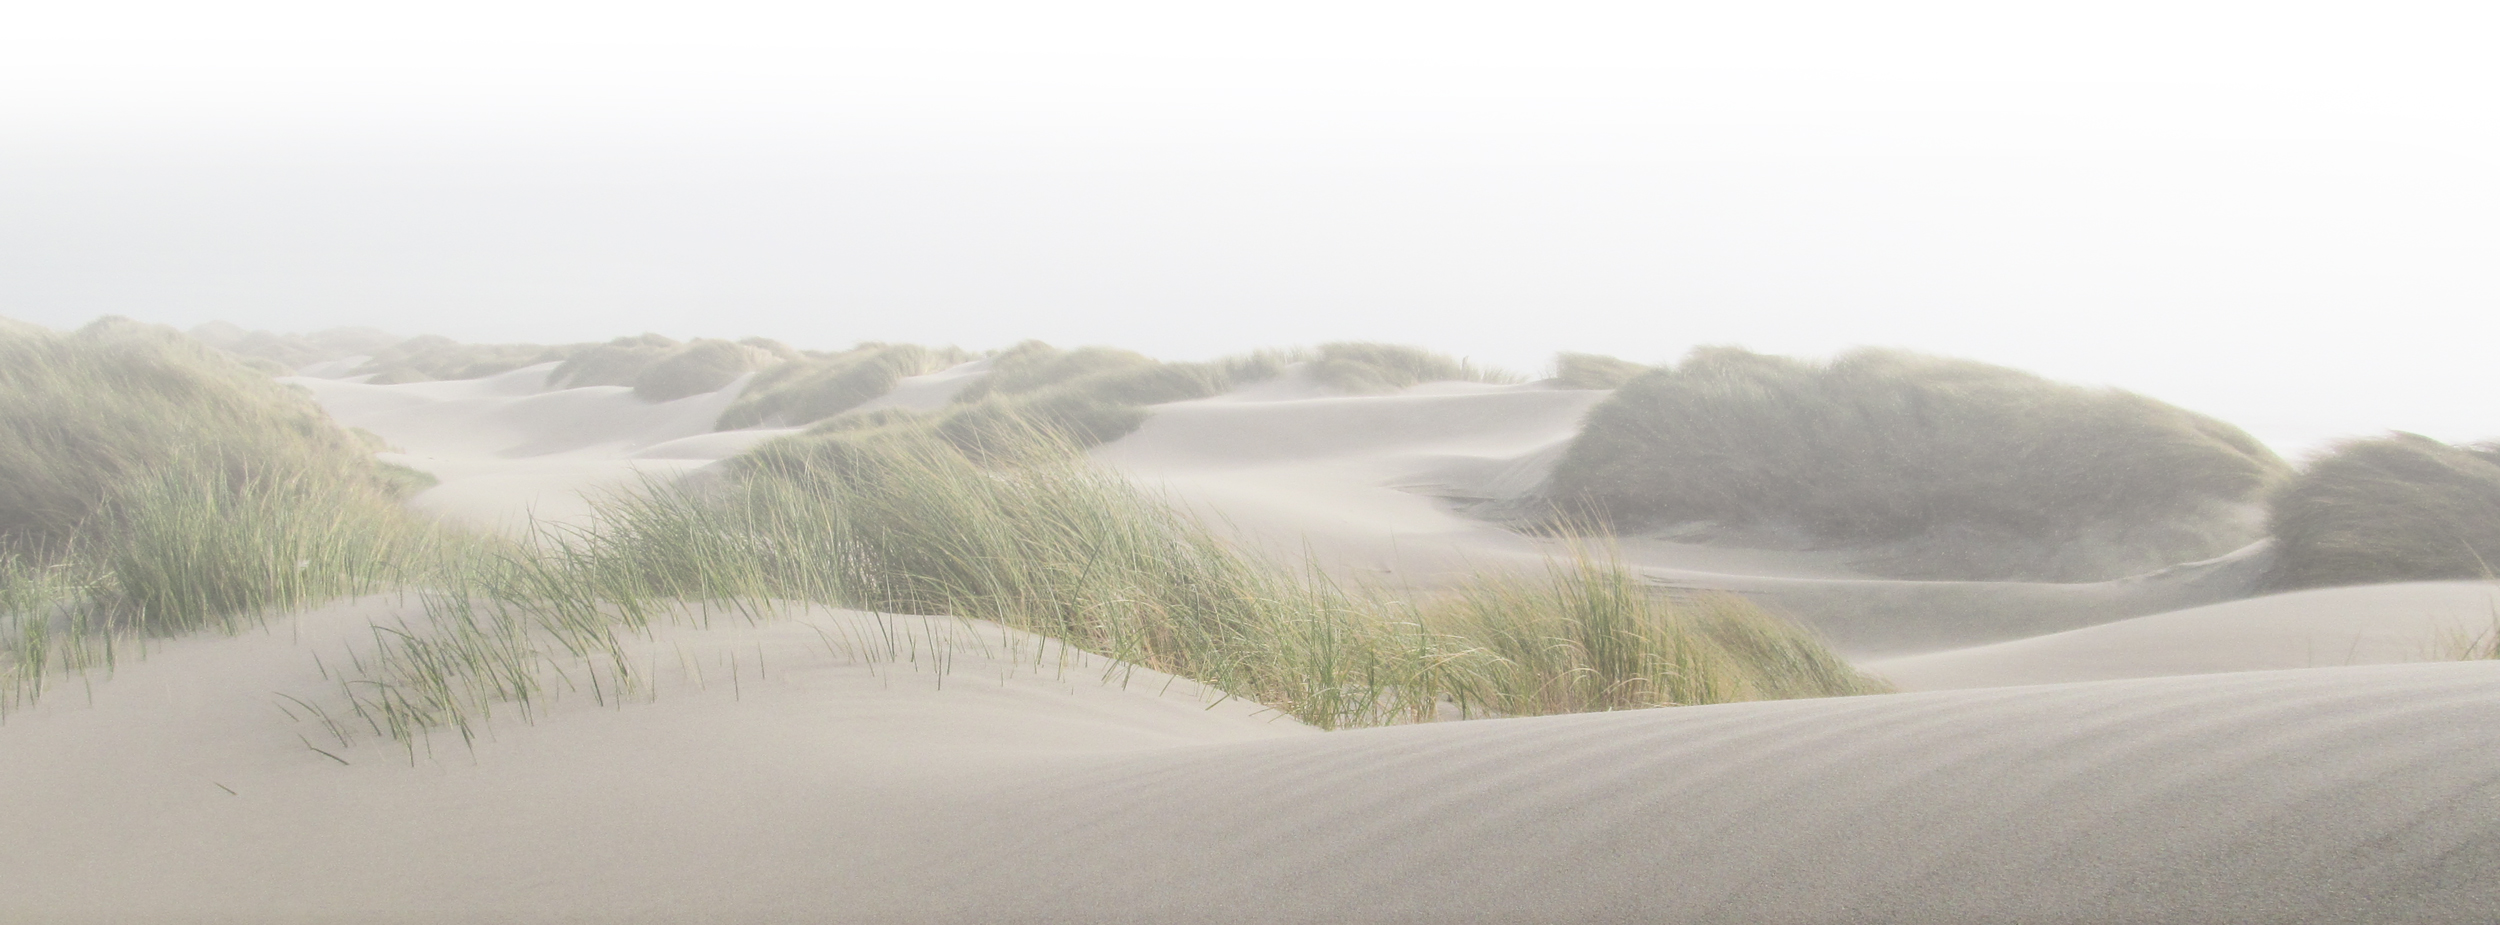 Dunes Footer Background